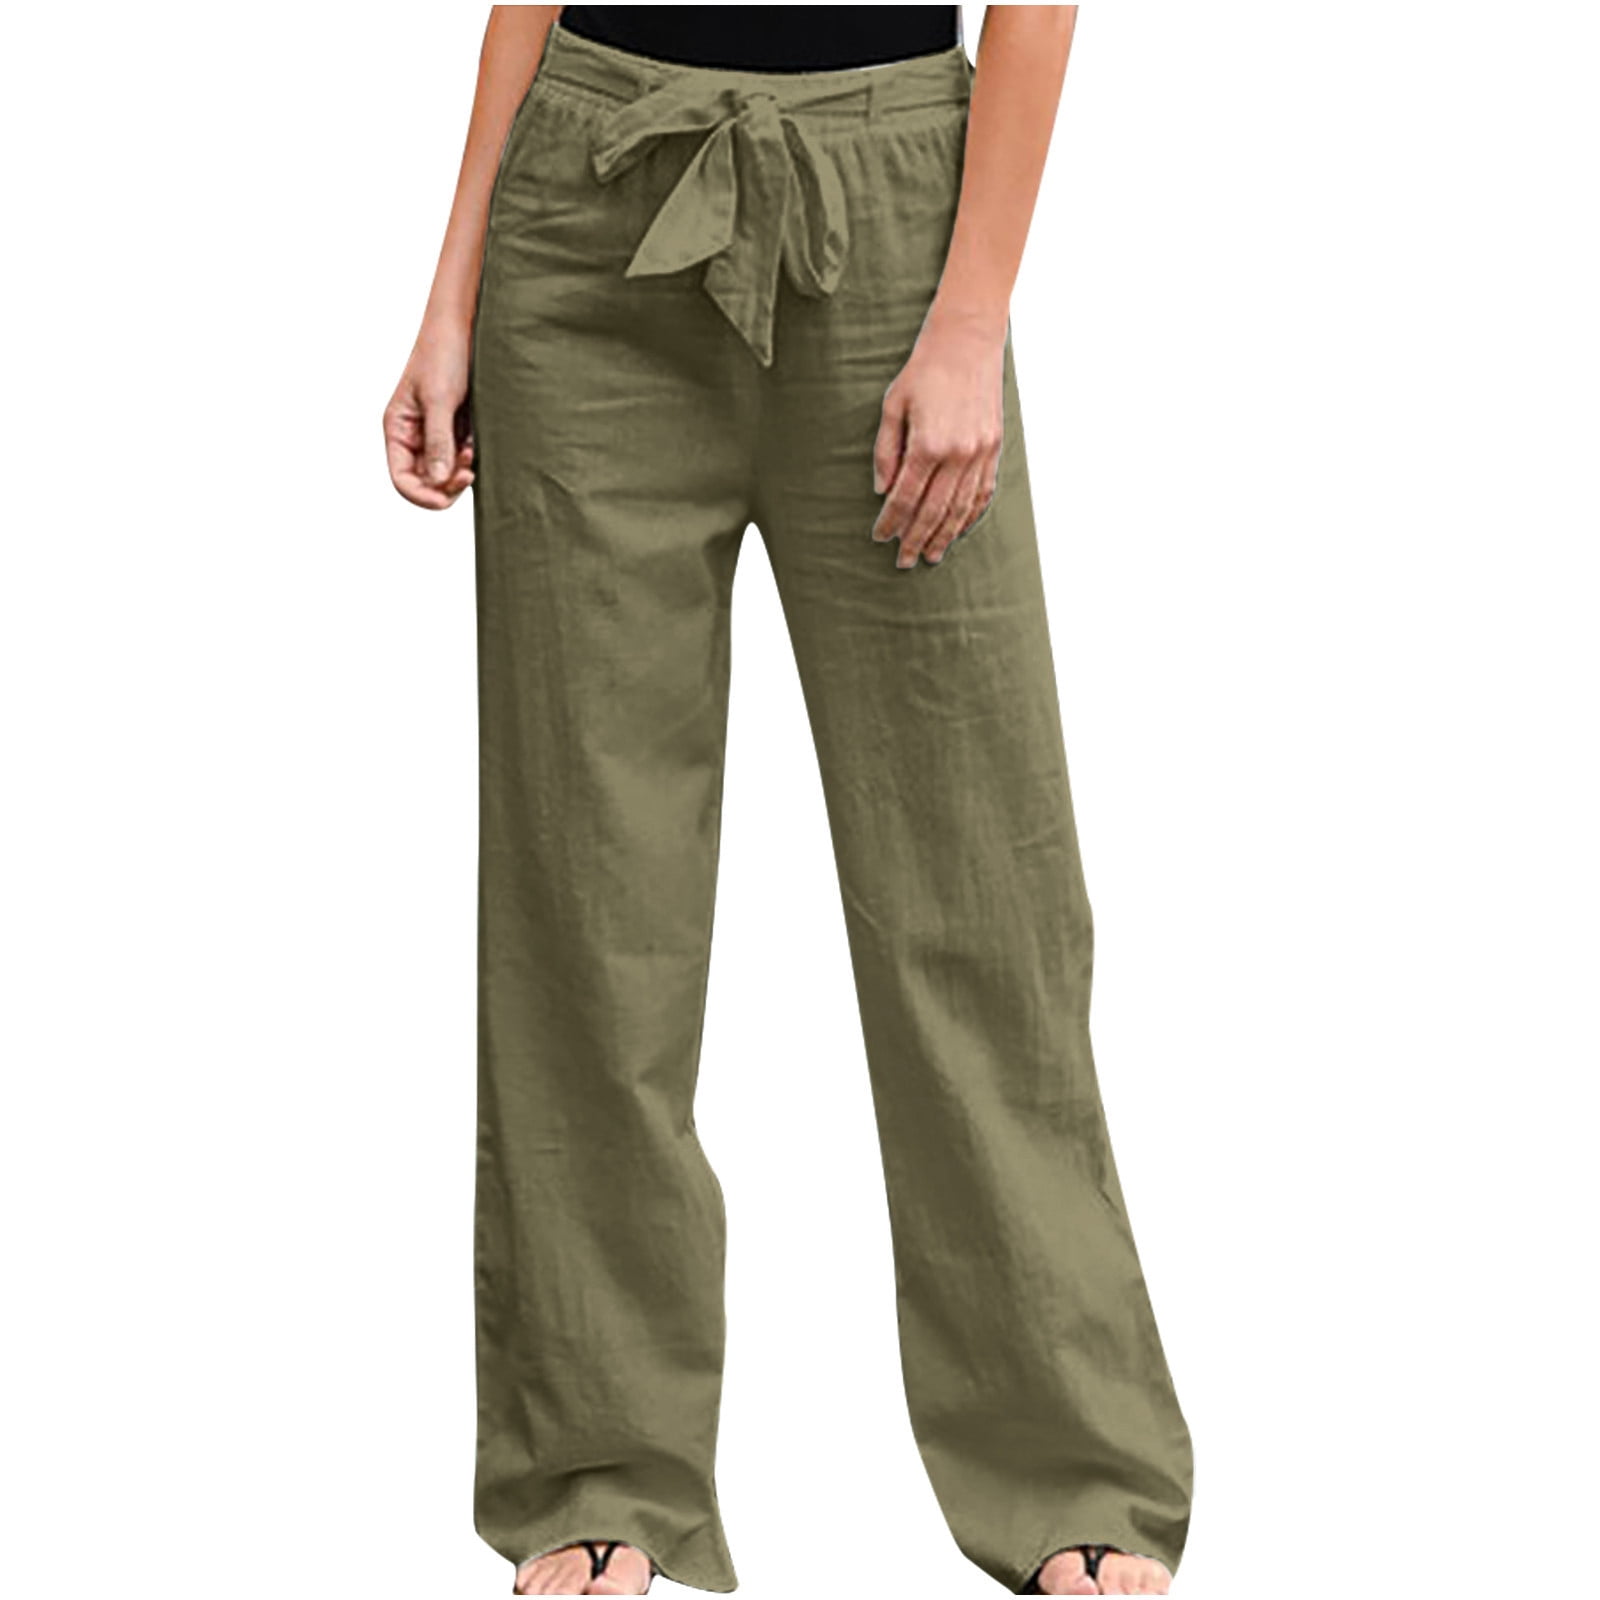 Aoochasliy Womens Pants Plus Size Clearance Solid Sweatpants Linen ...